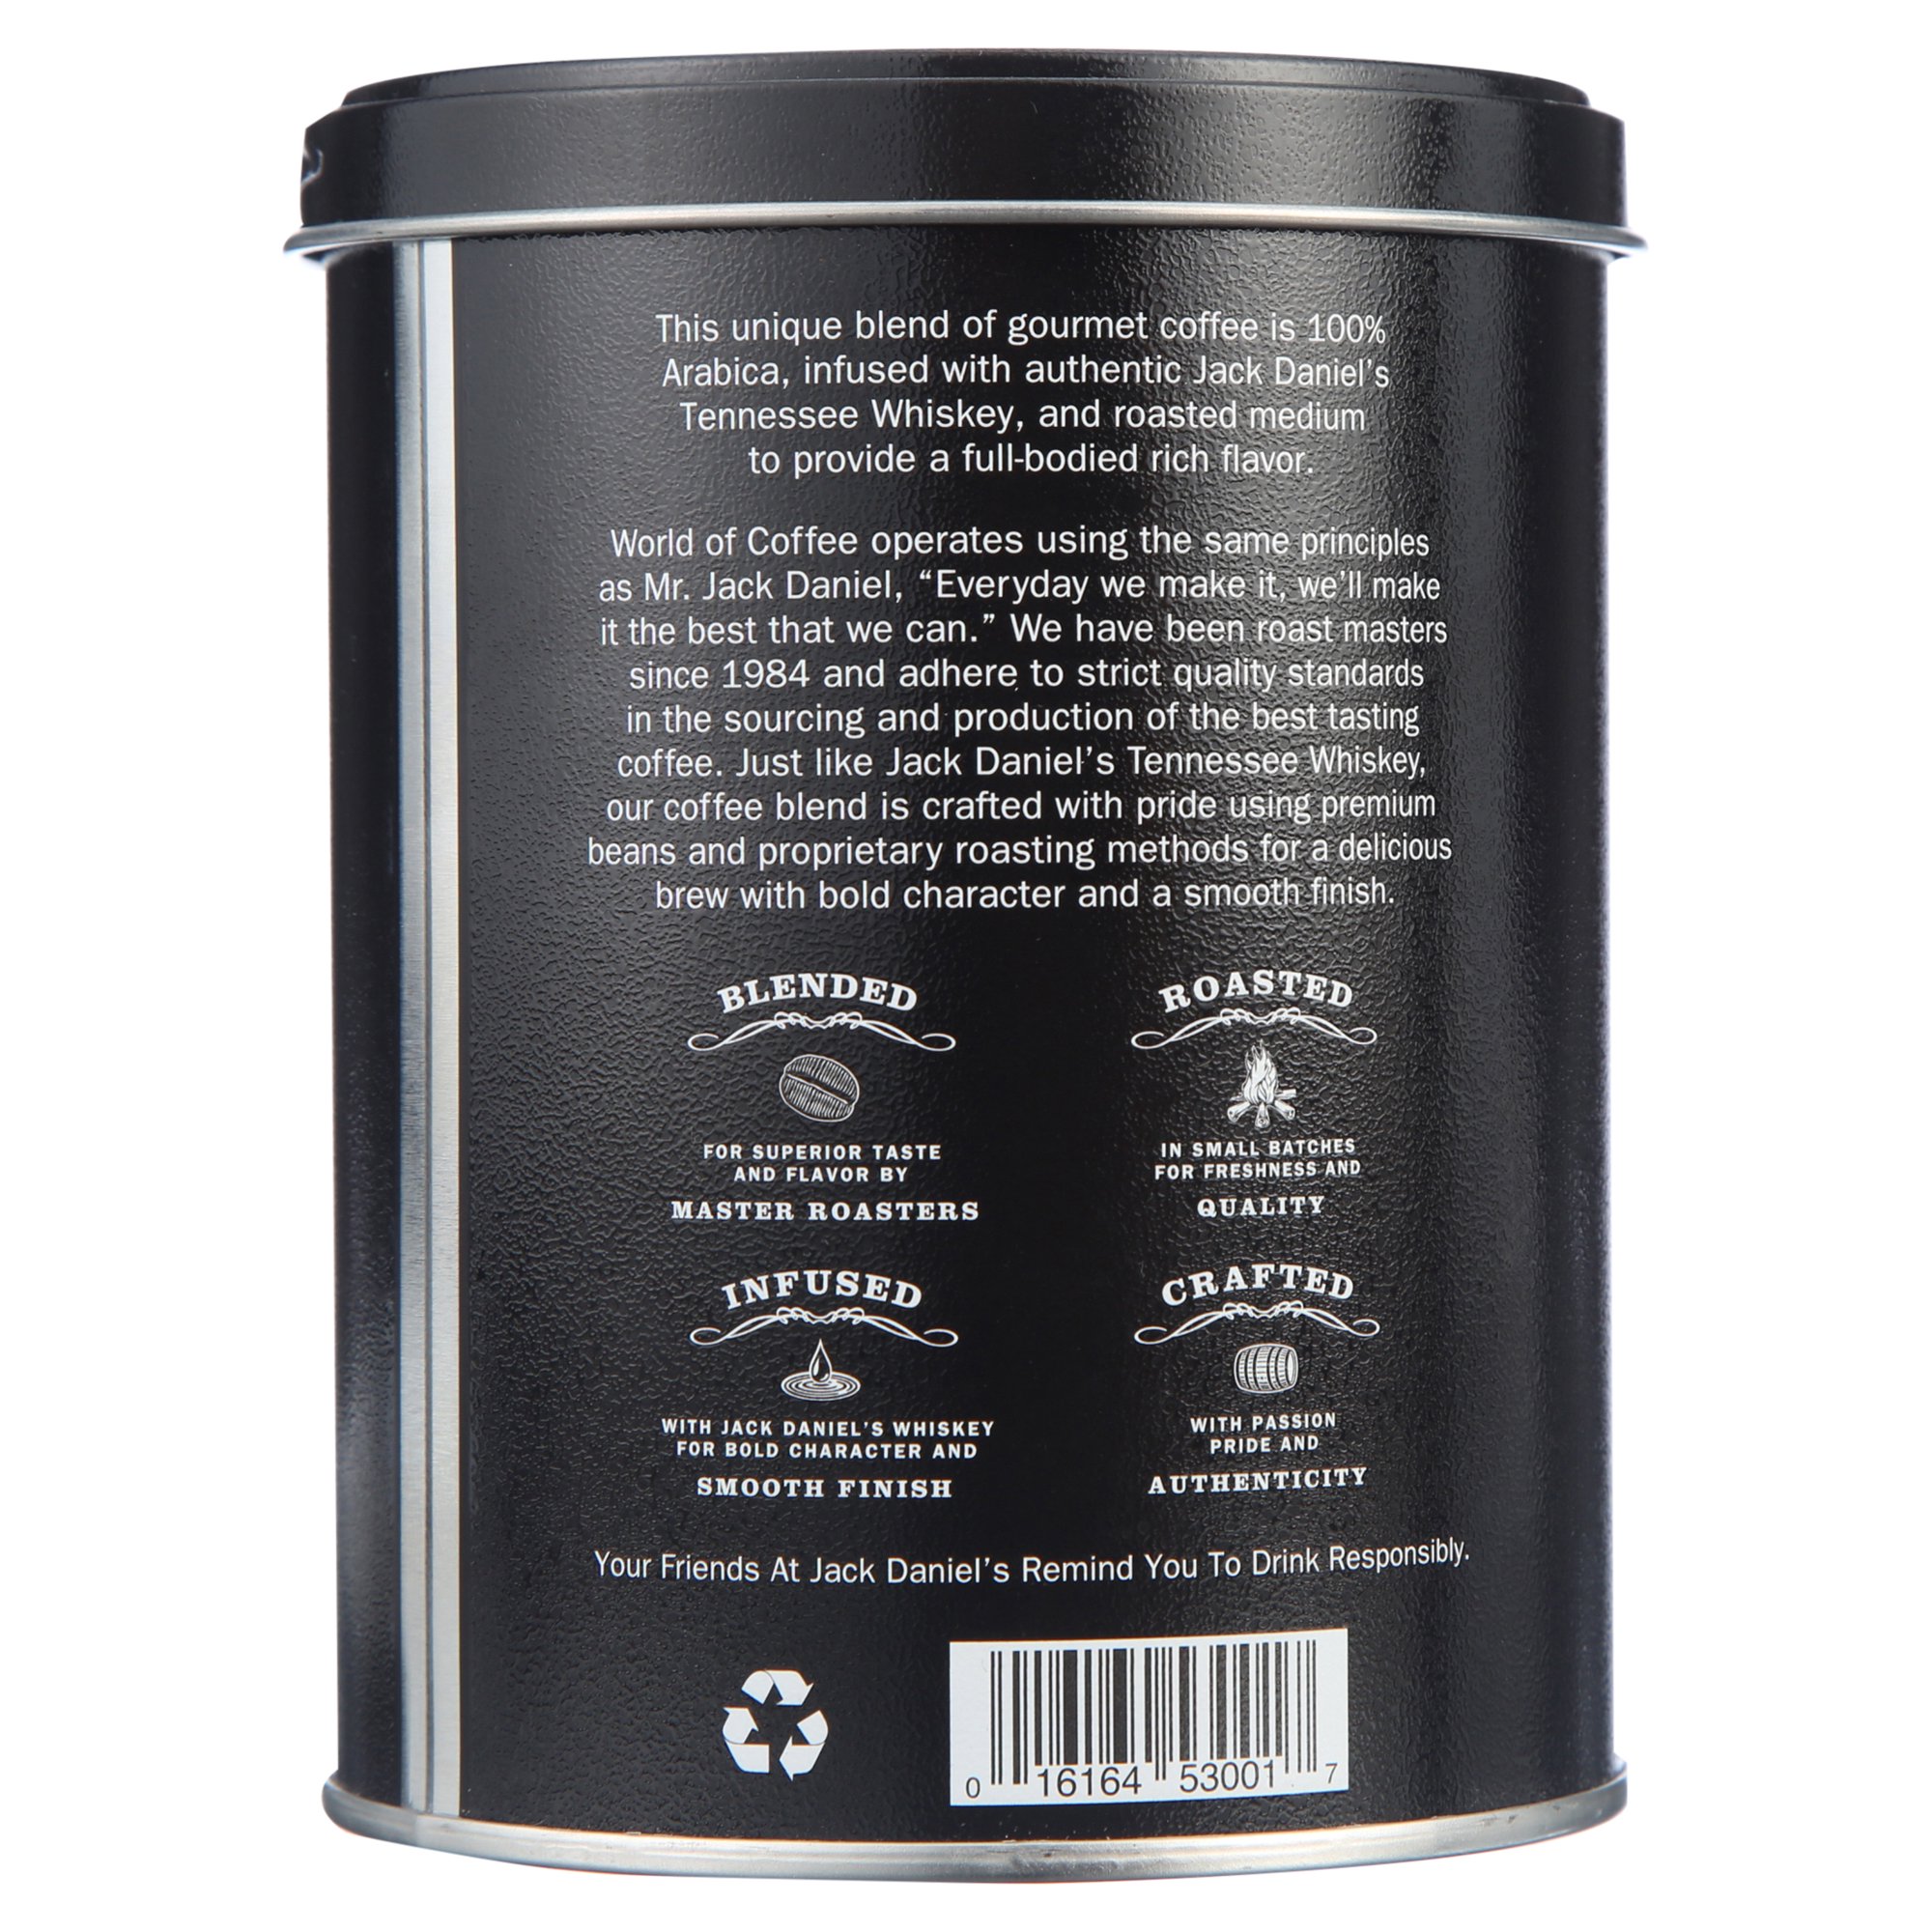 Jack Daniel's Tennessee Whiskey Coffee, 8.8 oz Can, Medium Roast, Ground Coffee - image 3 of 7